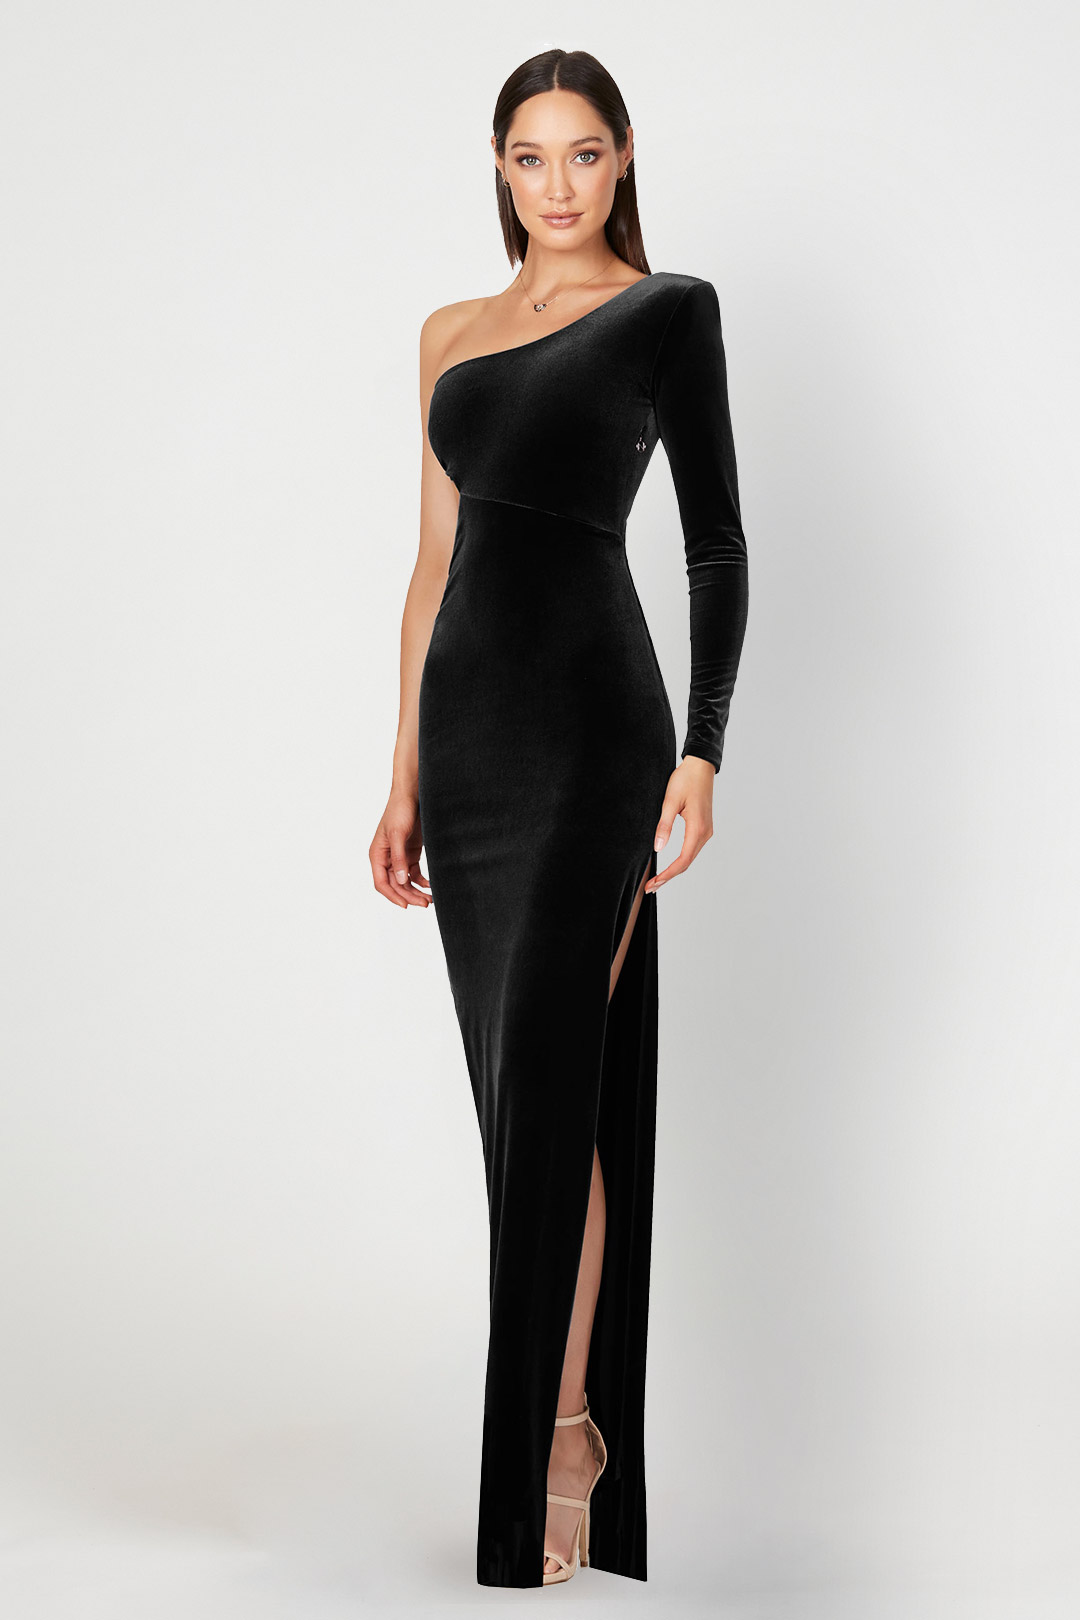 Dejavu Black Gown -  Nookie Dress Rental